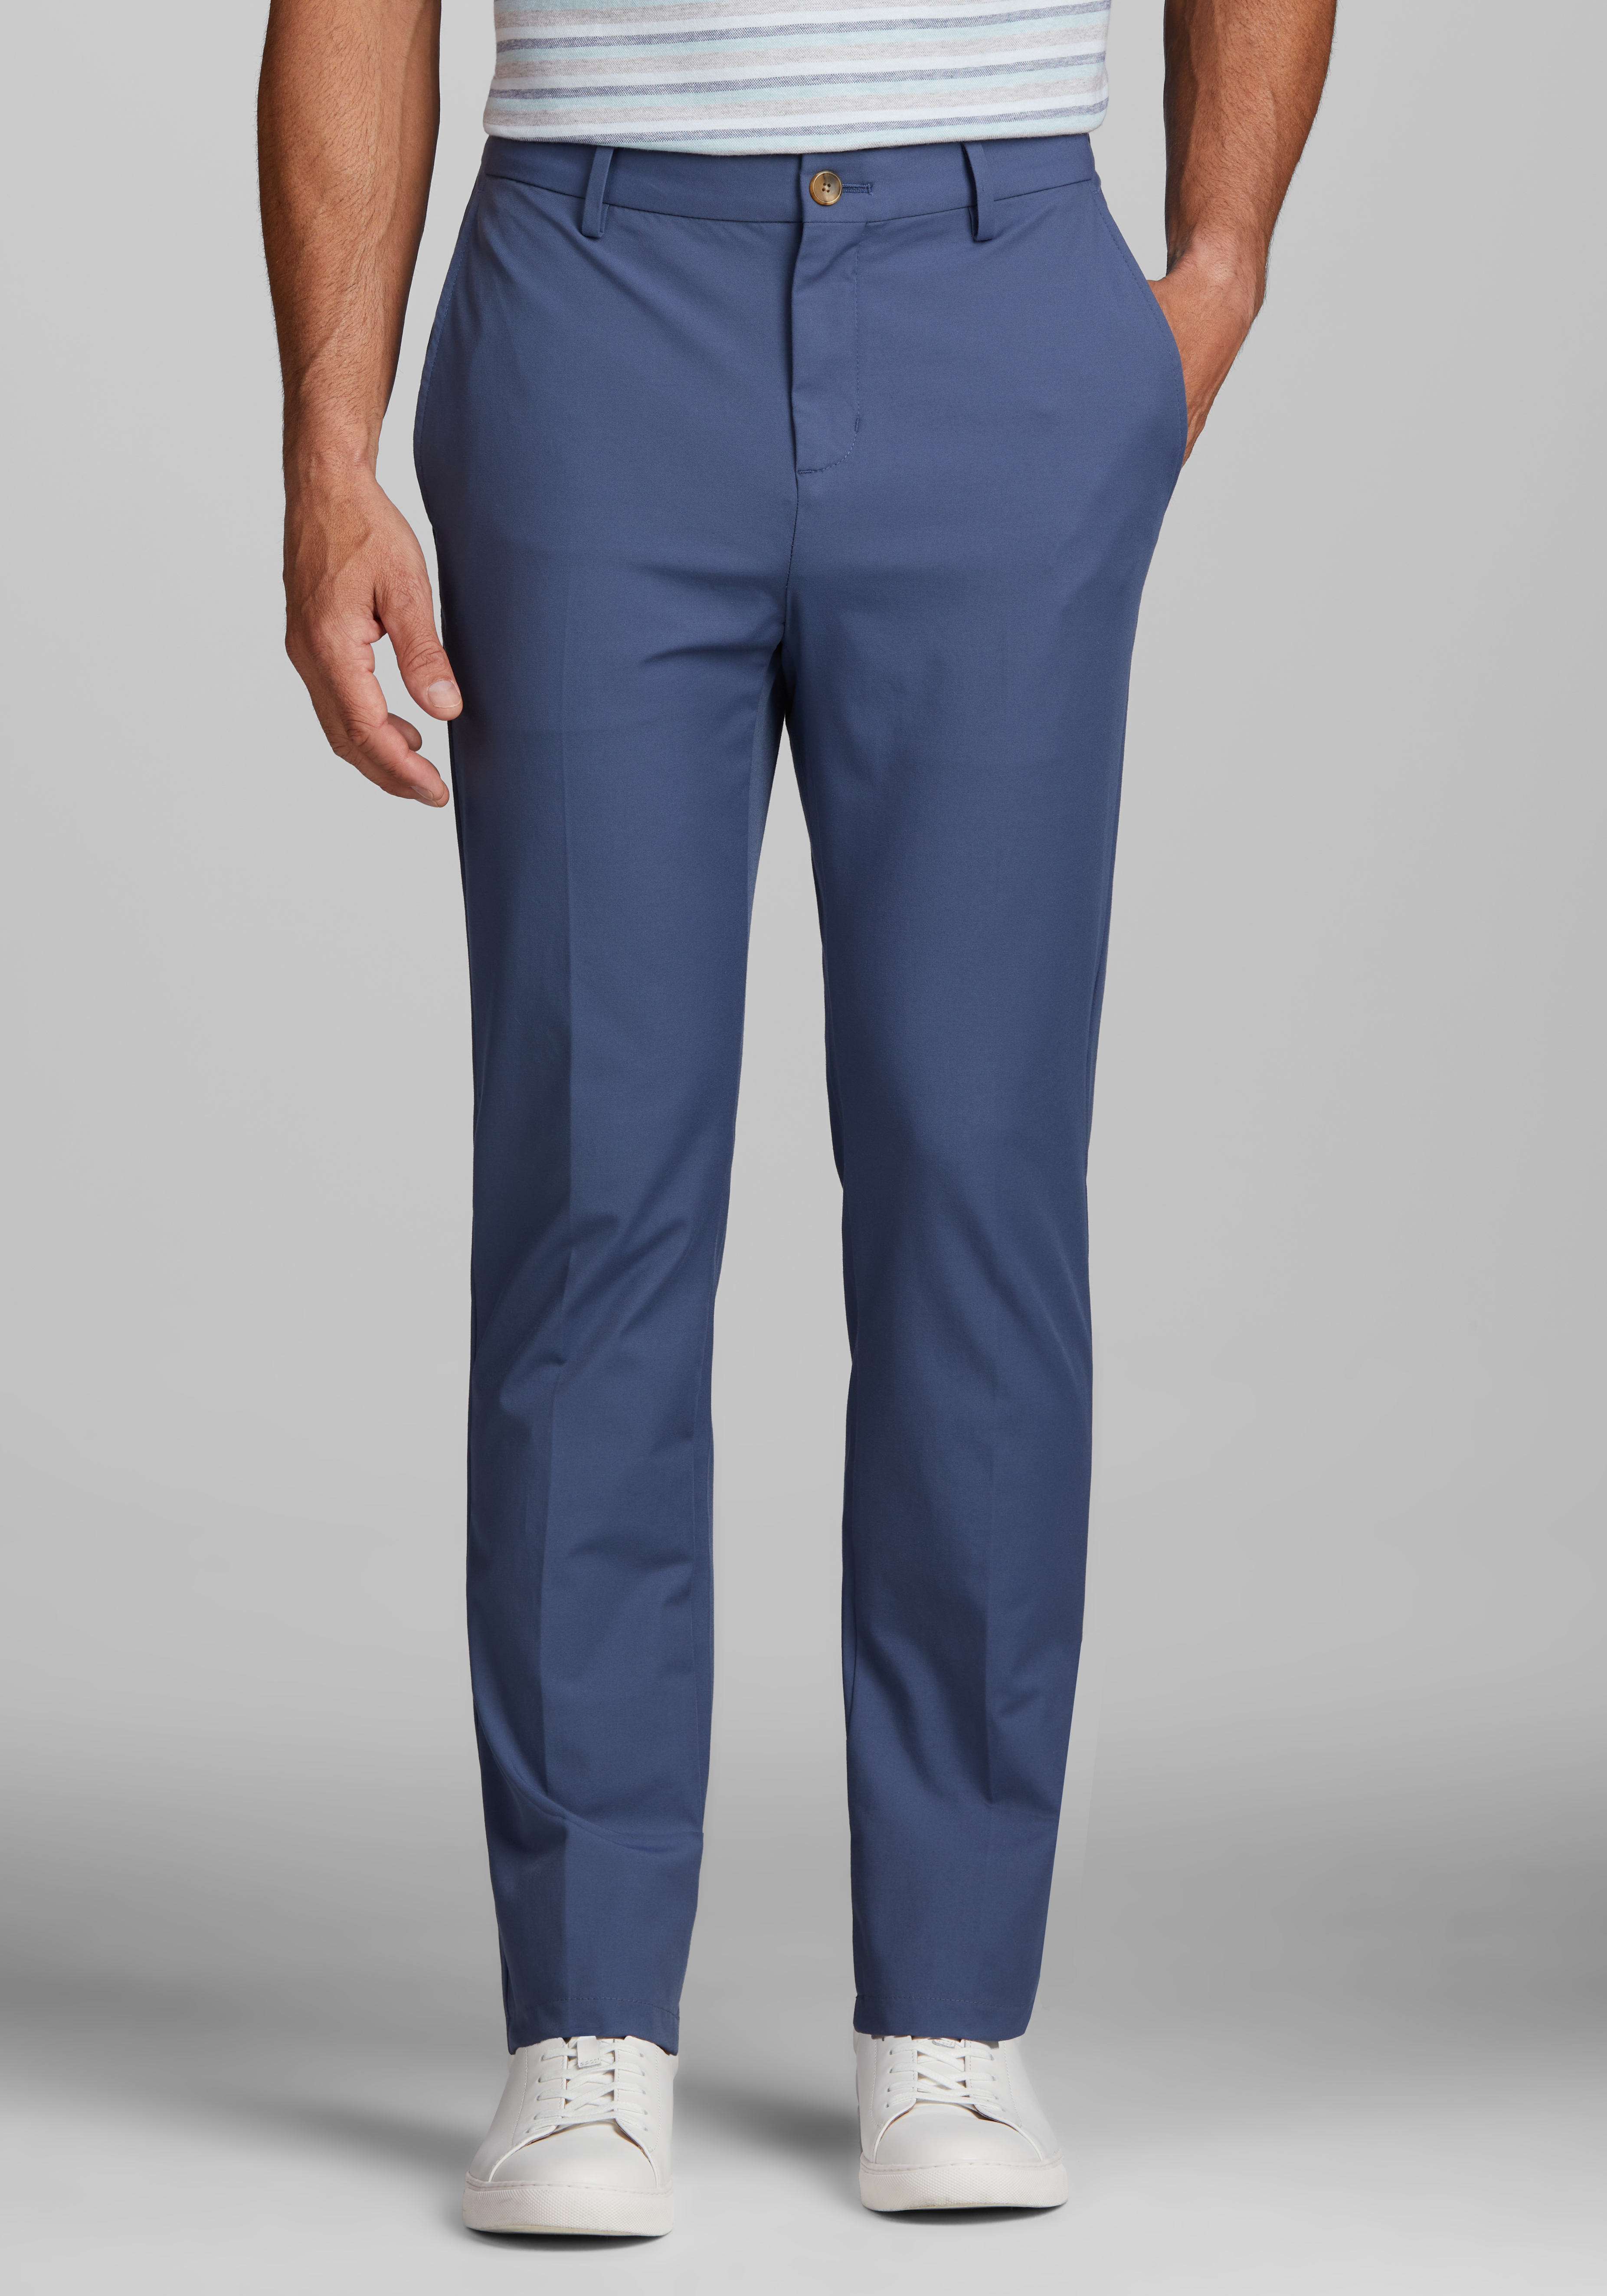 Banana Republic Men's 5 Pocket Pant Slim Fit Stretch Fabric Comfort, Blue  40x32